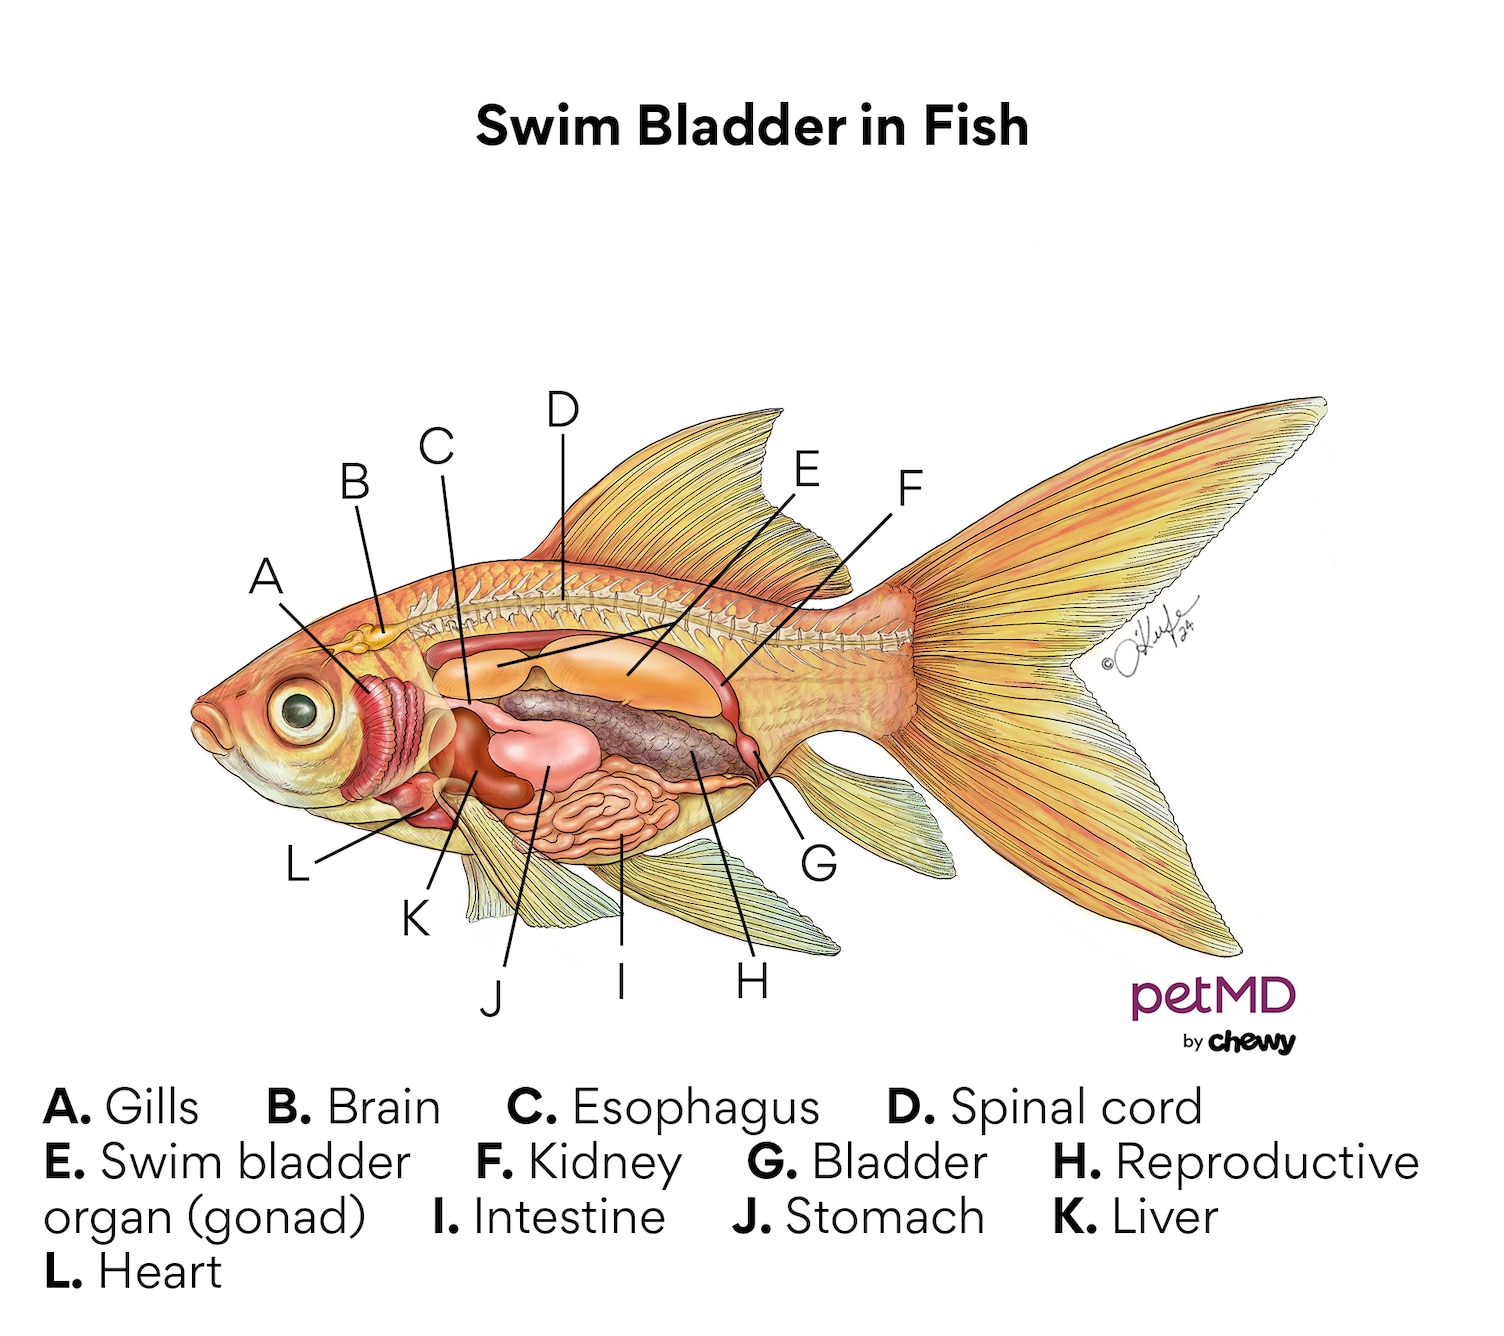 The diagram of the swim bladder in fish.